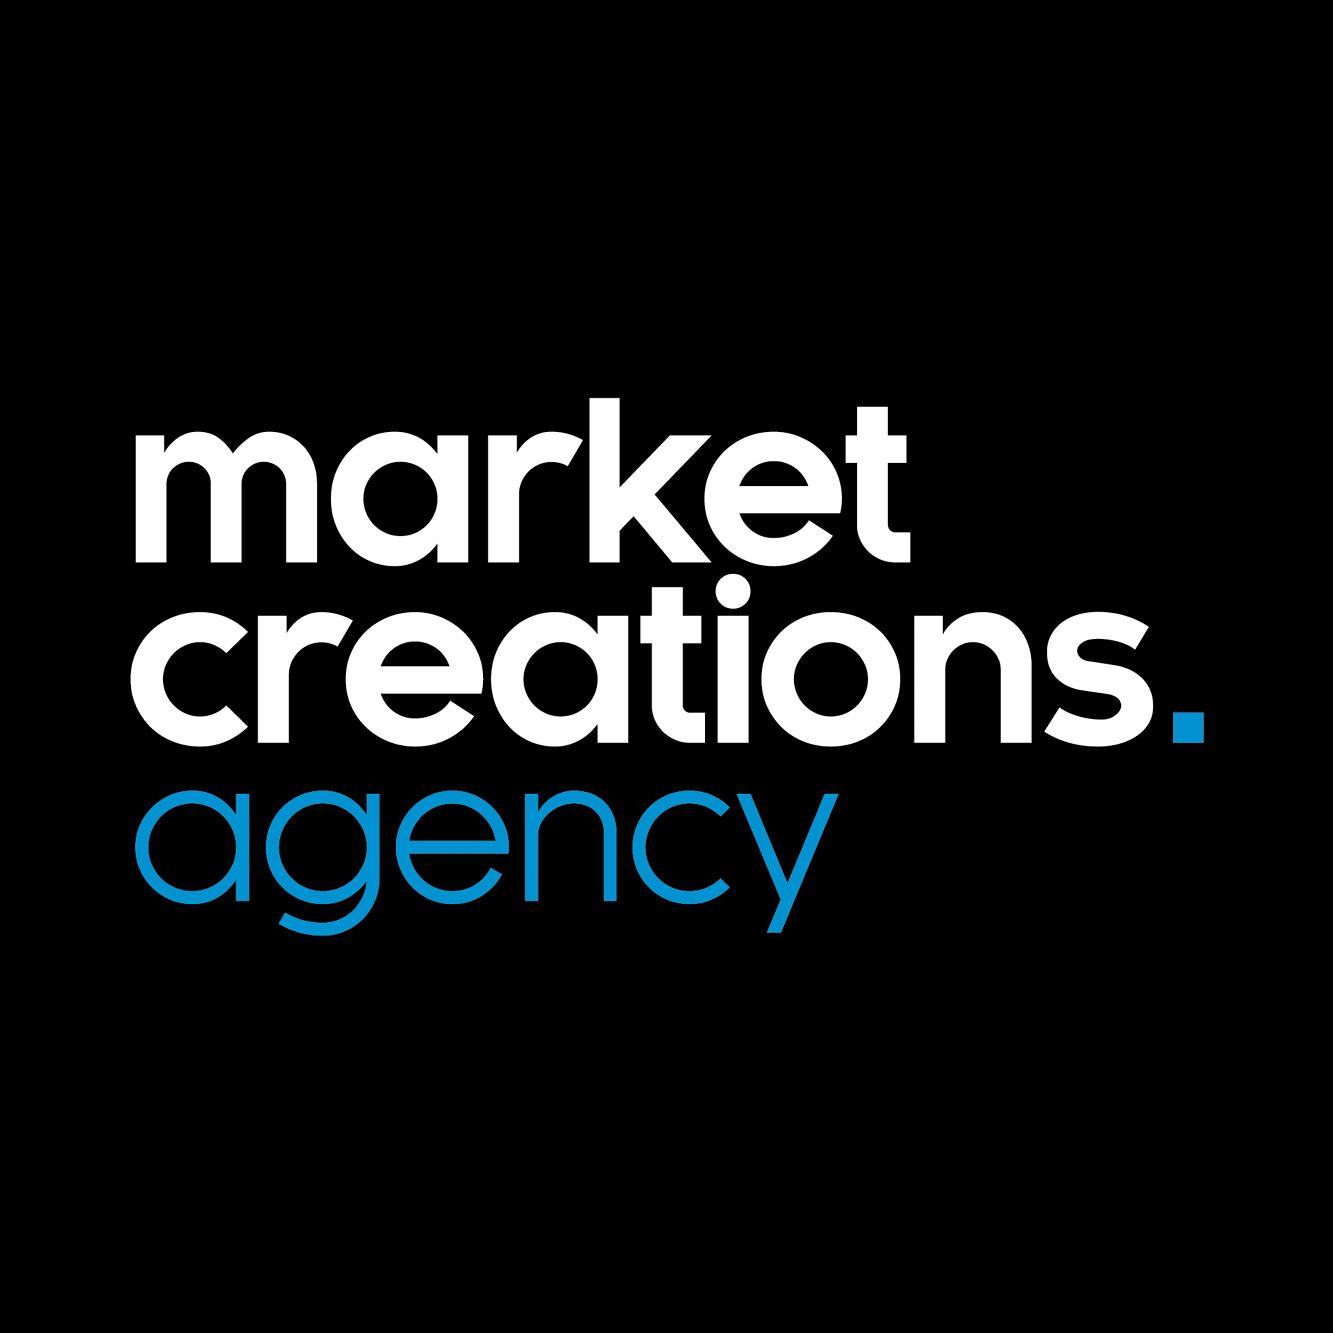 Market Creations Agency